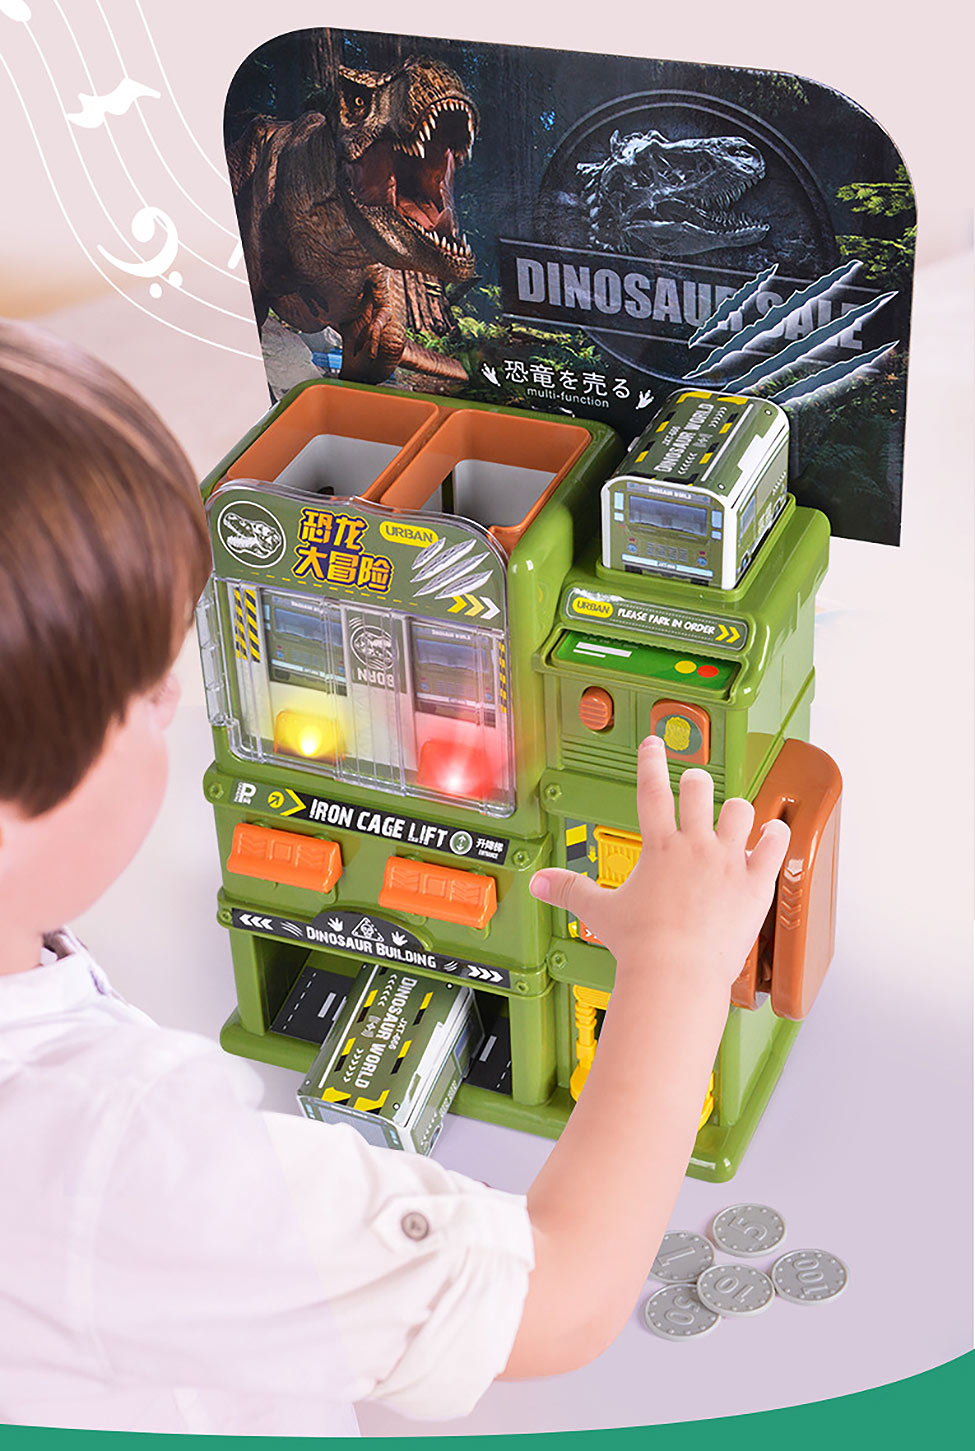 Automatic-Dinosaur-Building-Vending-Machine-Toy-with-10-Dinosaur-Figurine-9